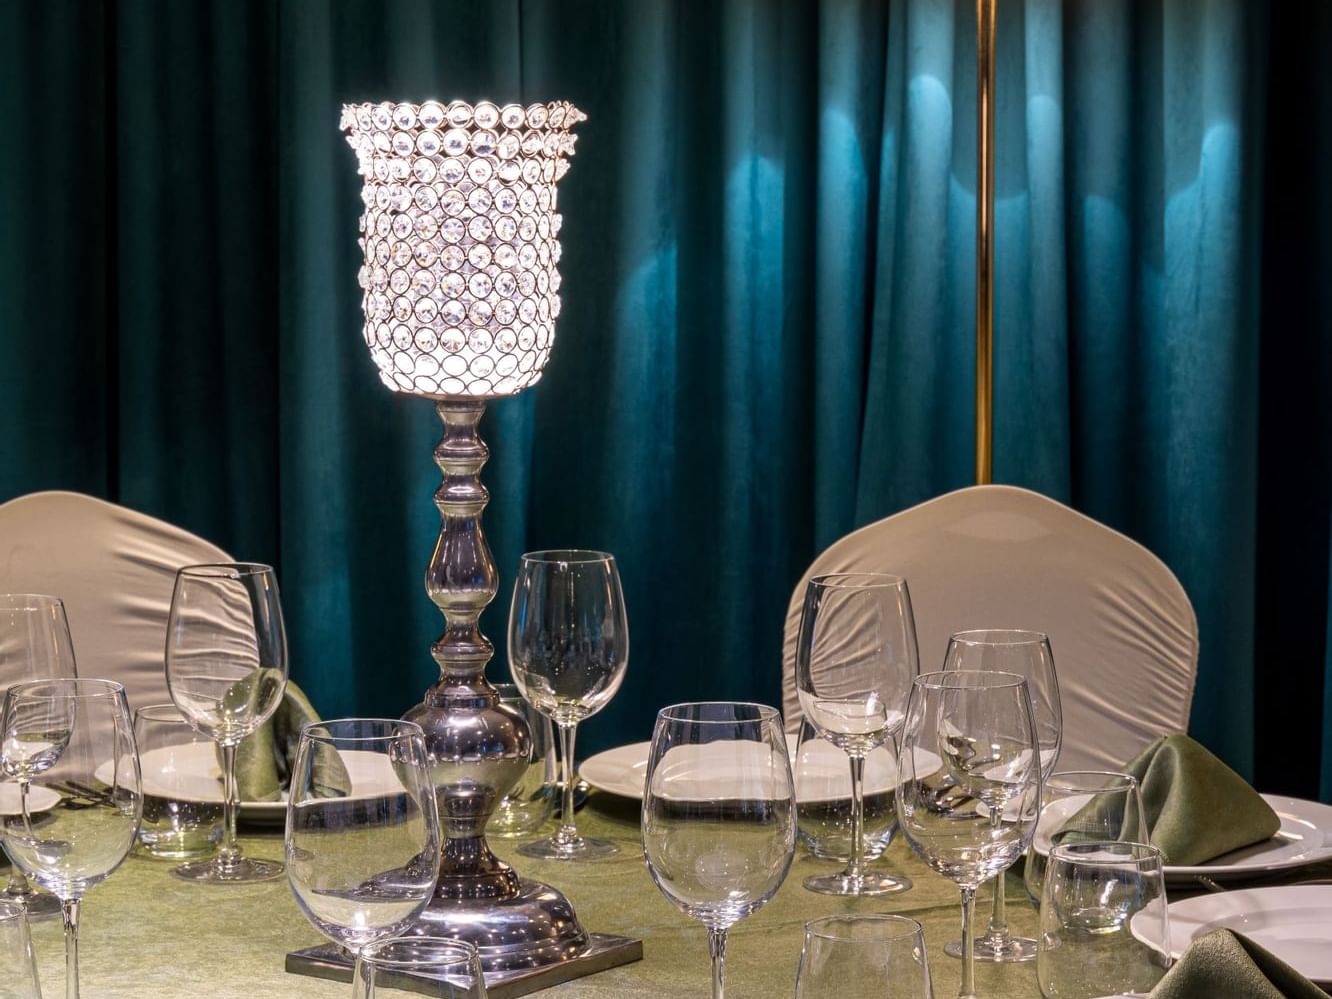 Plates & wine glasses arranged in Tisa 1 at Ana Hotels Bradul